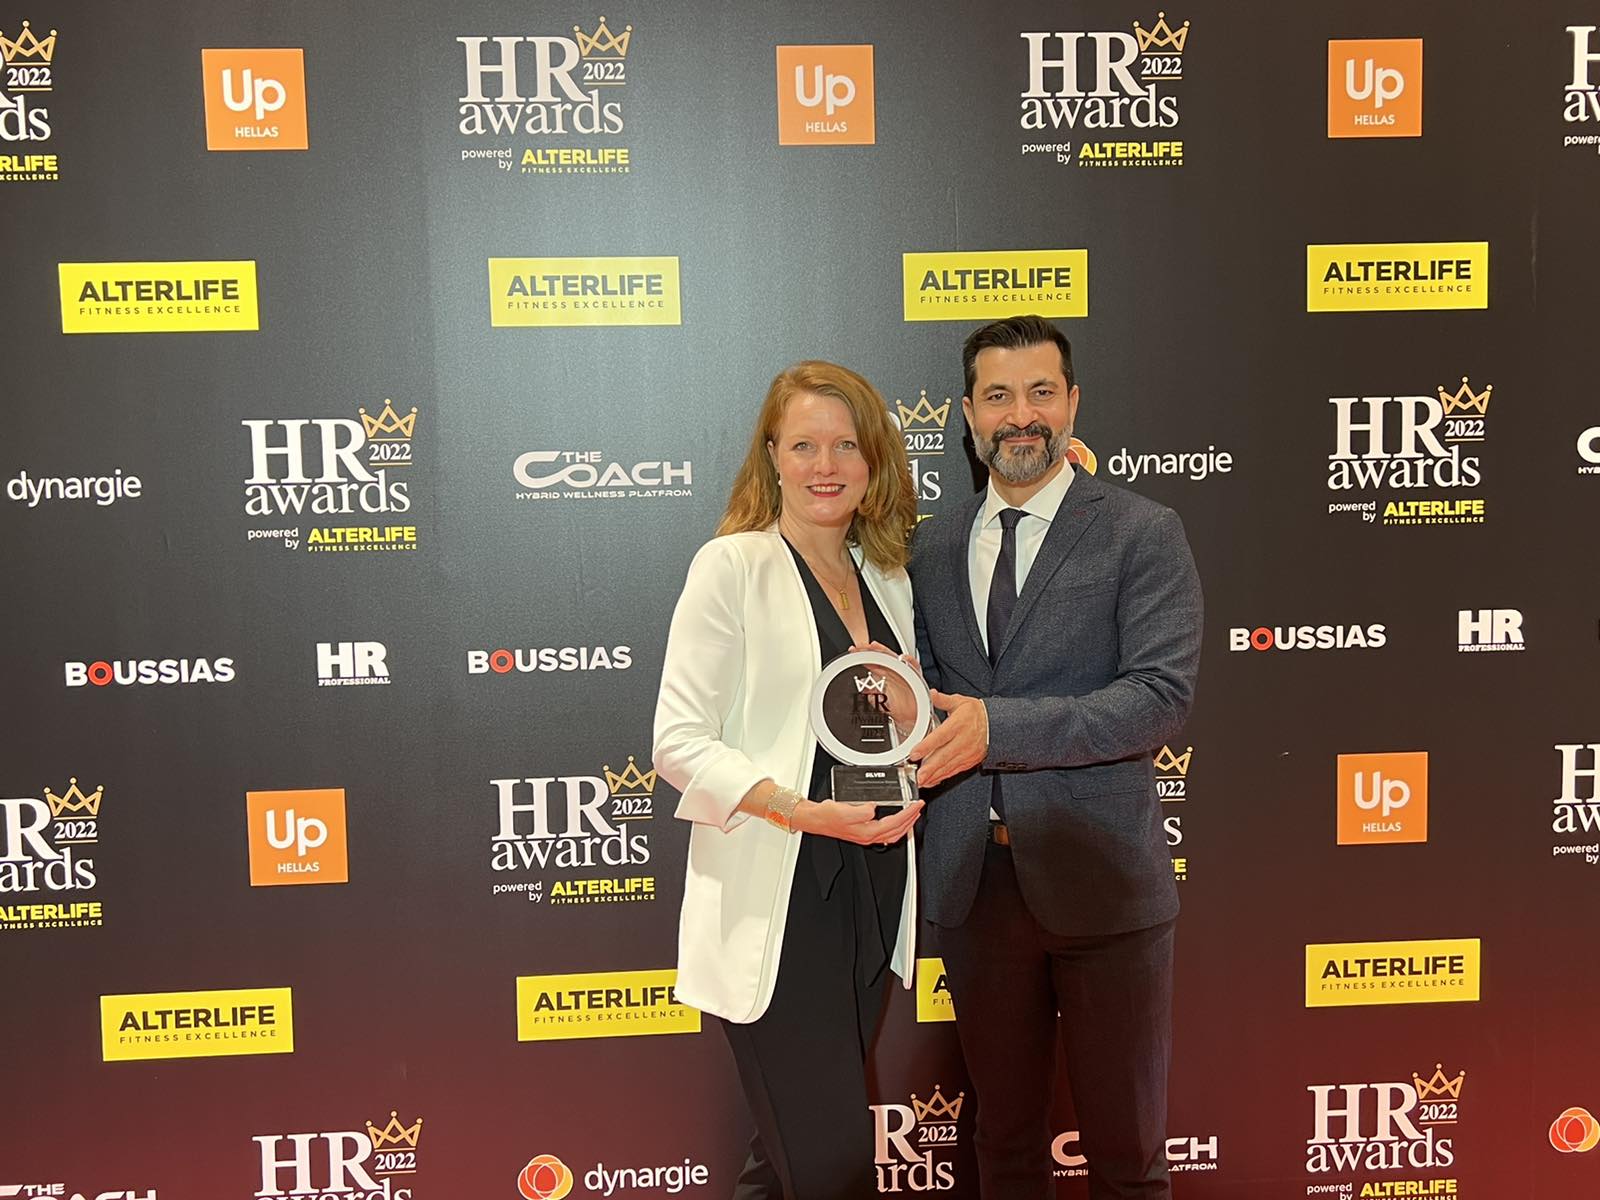 HR_Awards_2022